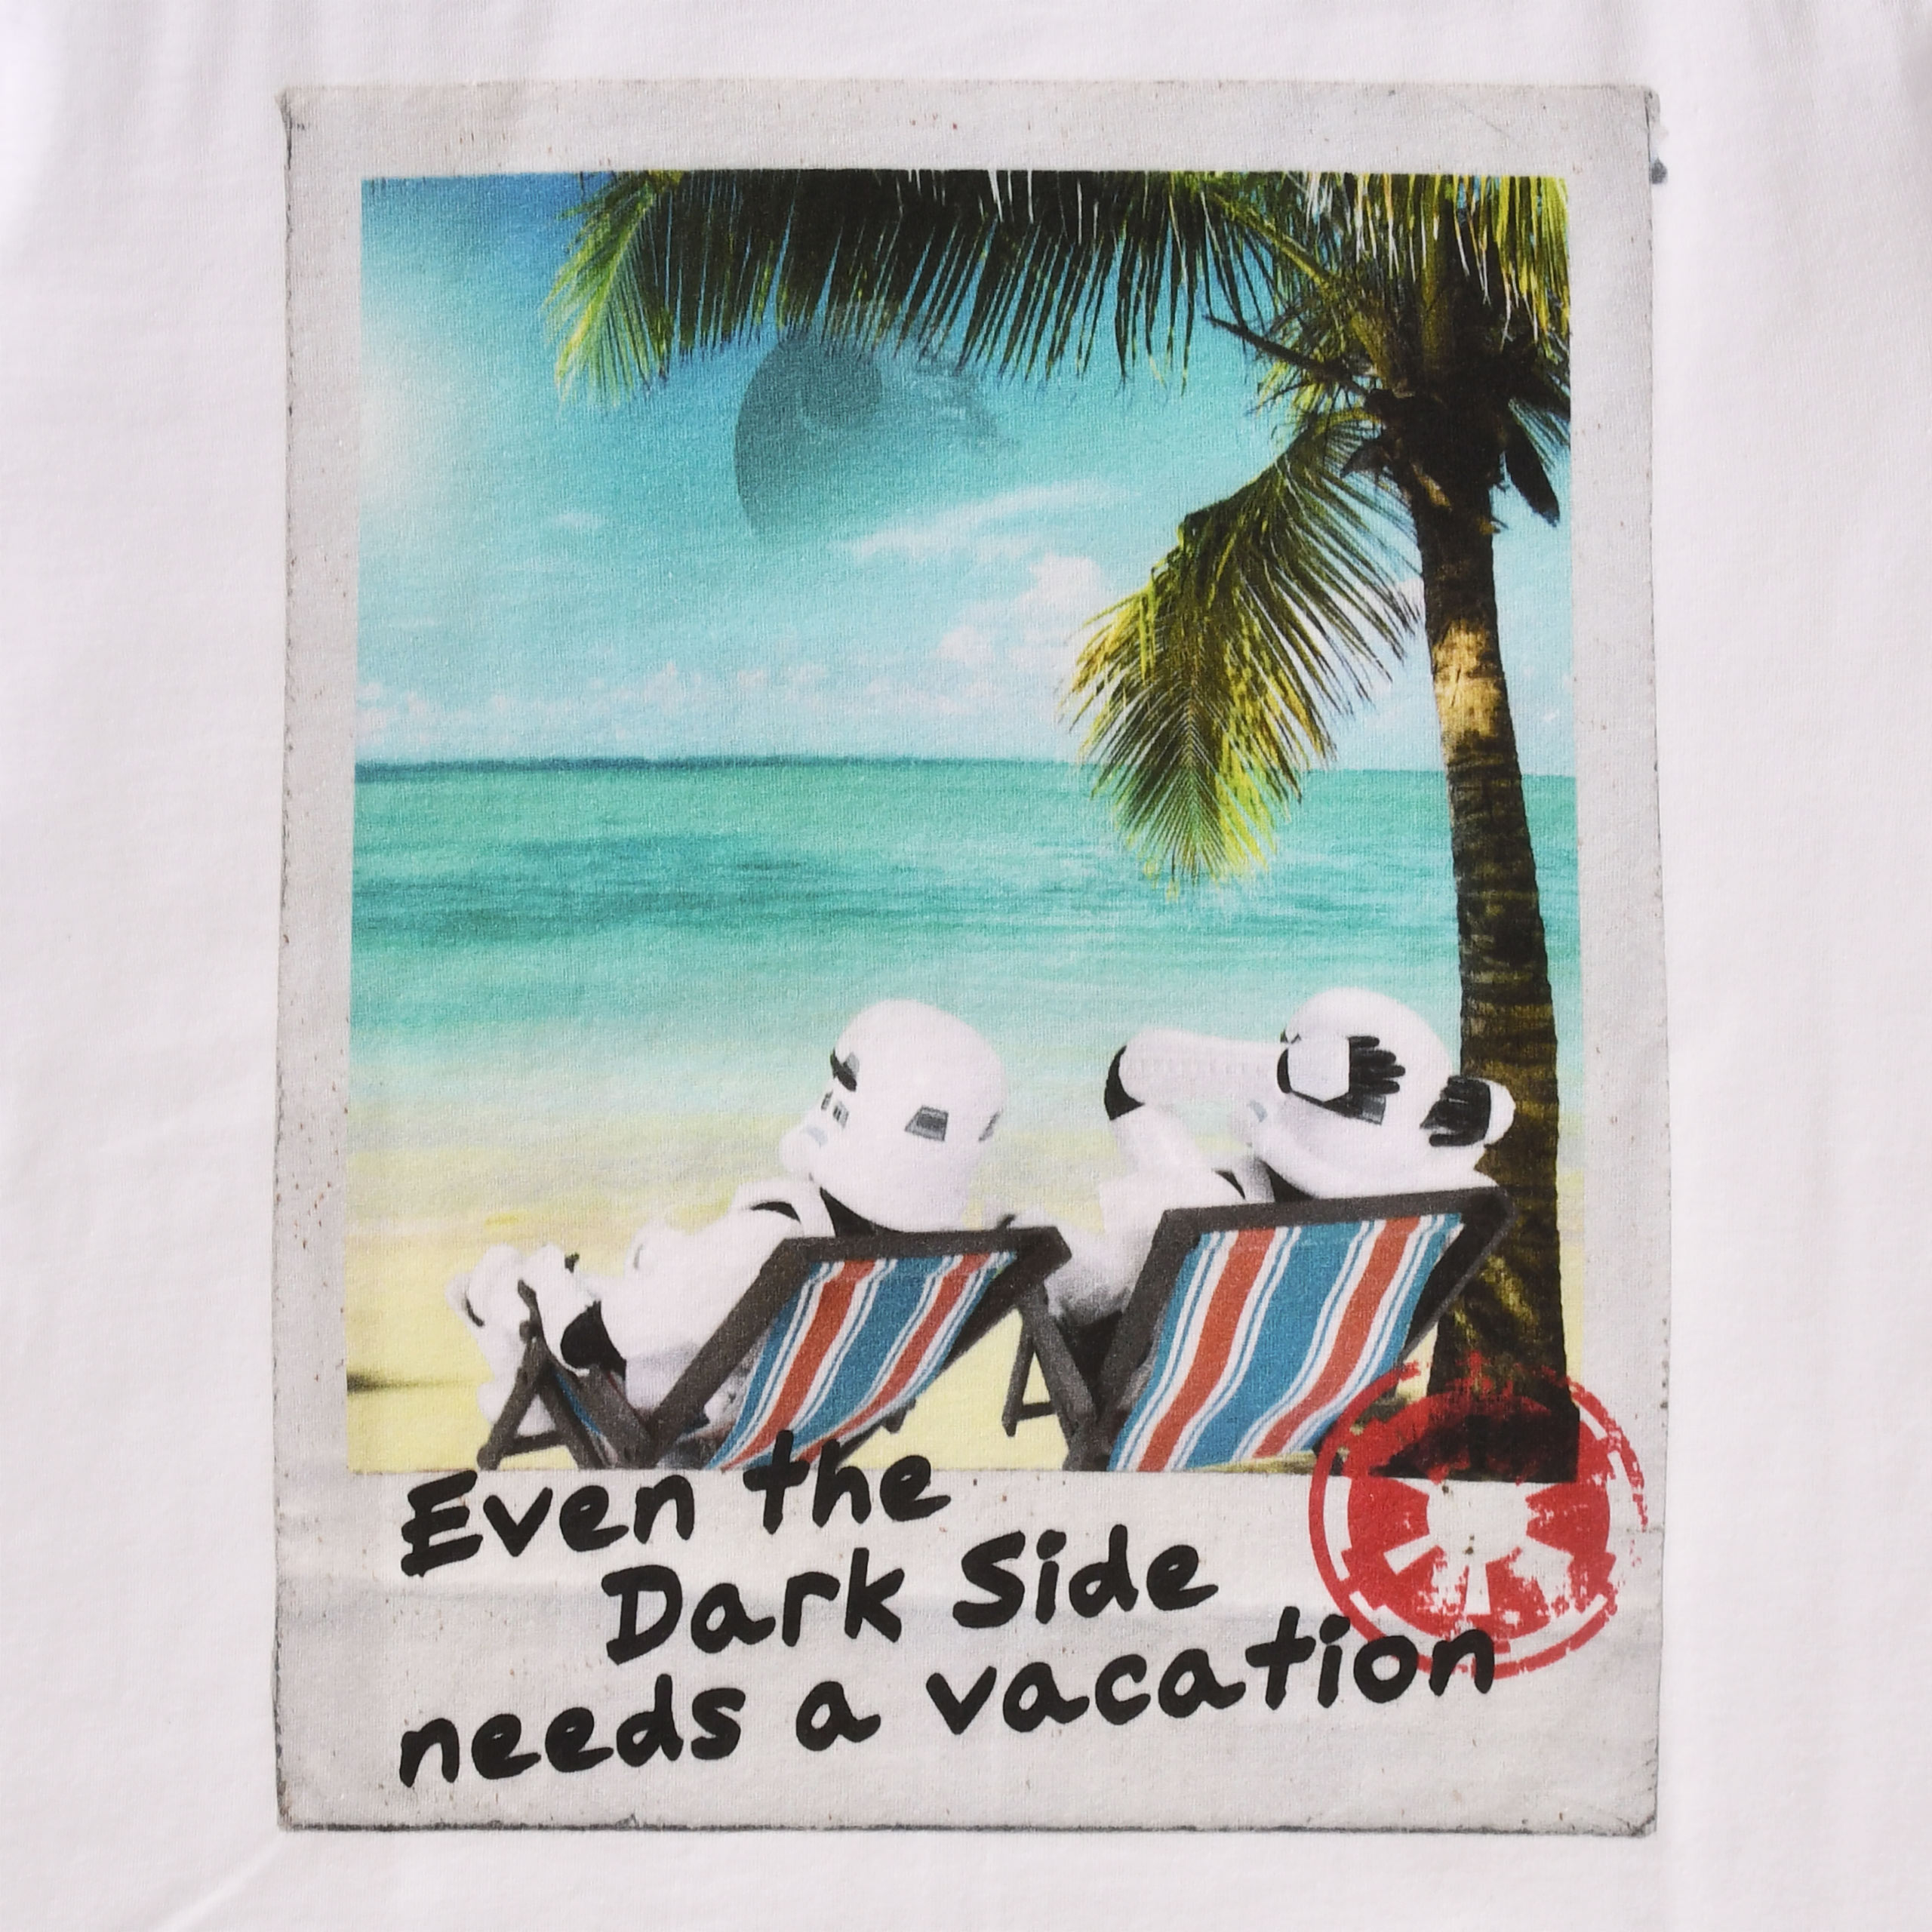 Star Wars - T-shirt de vacances Dark Side blanc